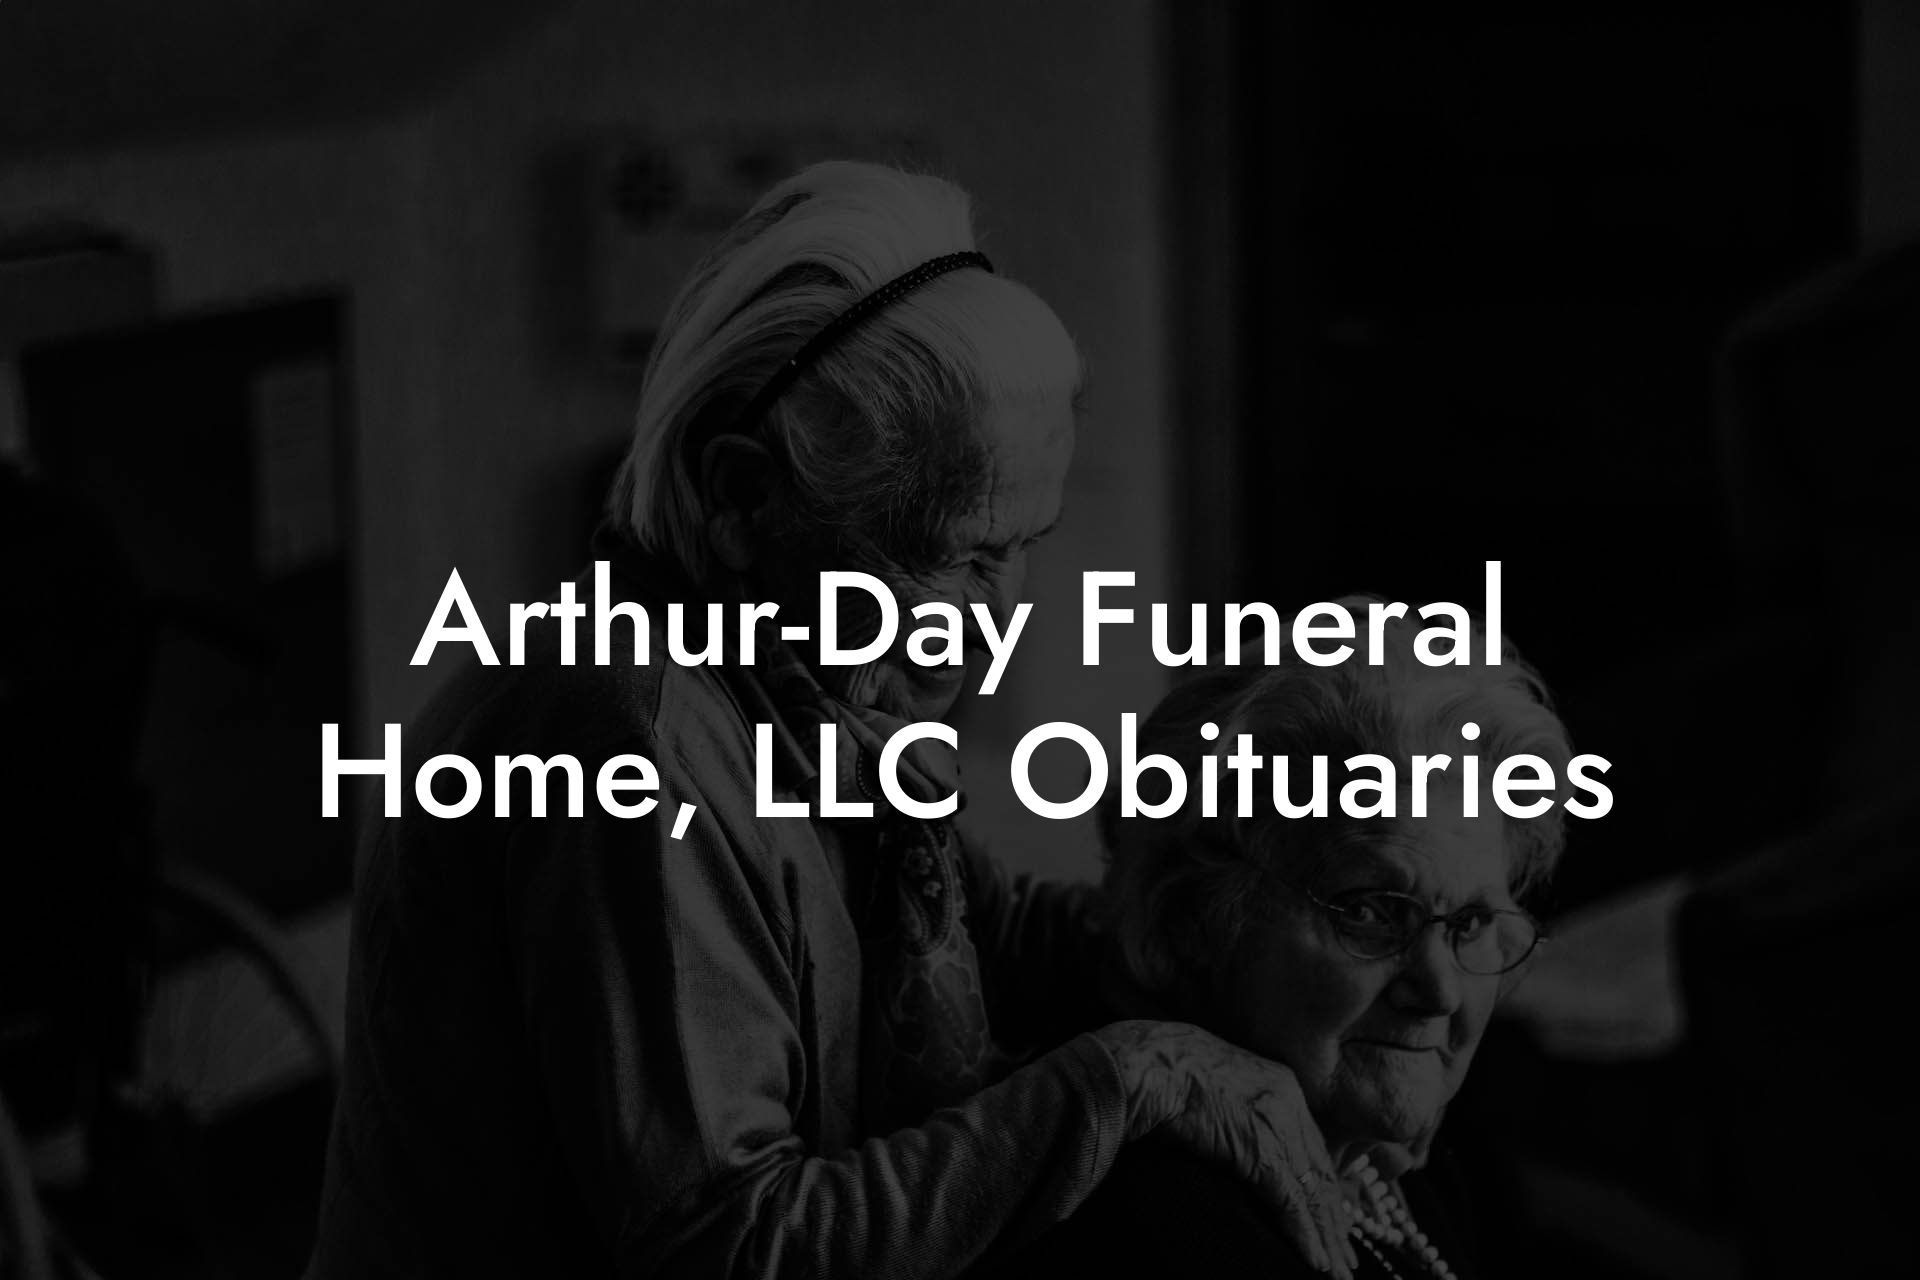 Arthur-Day Funeral Home, LLC Obituaries